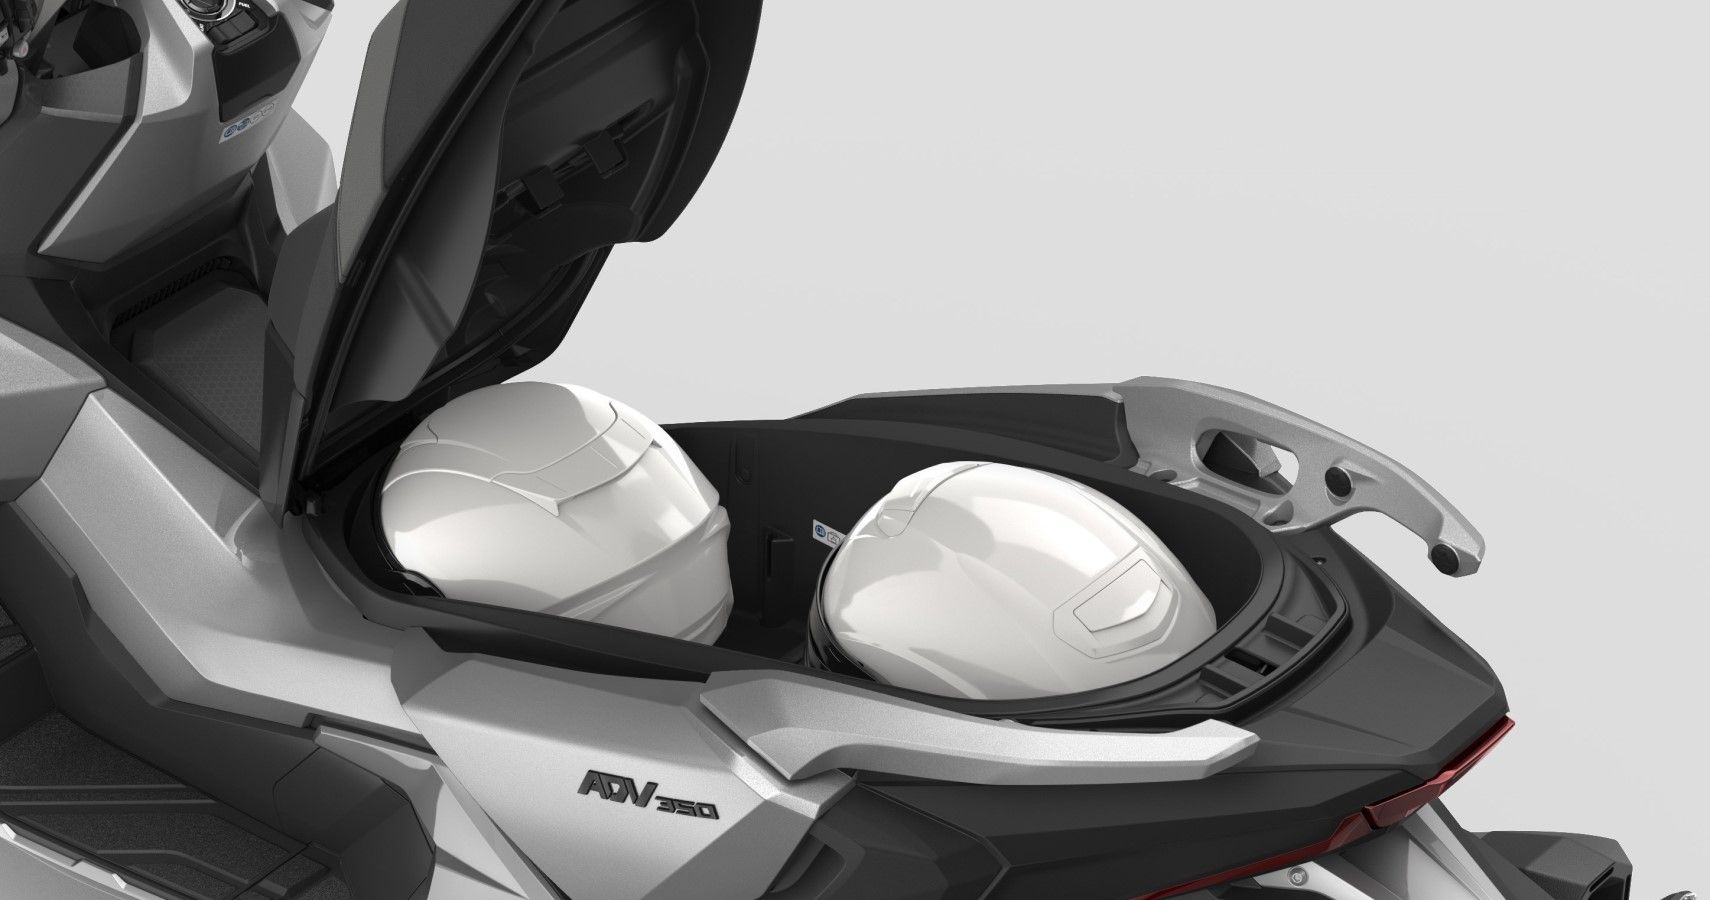 2022 Honda ADV350 fits 2 full-sized helmet in underseat storage